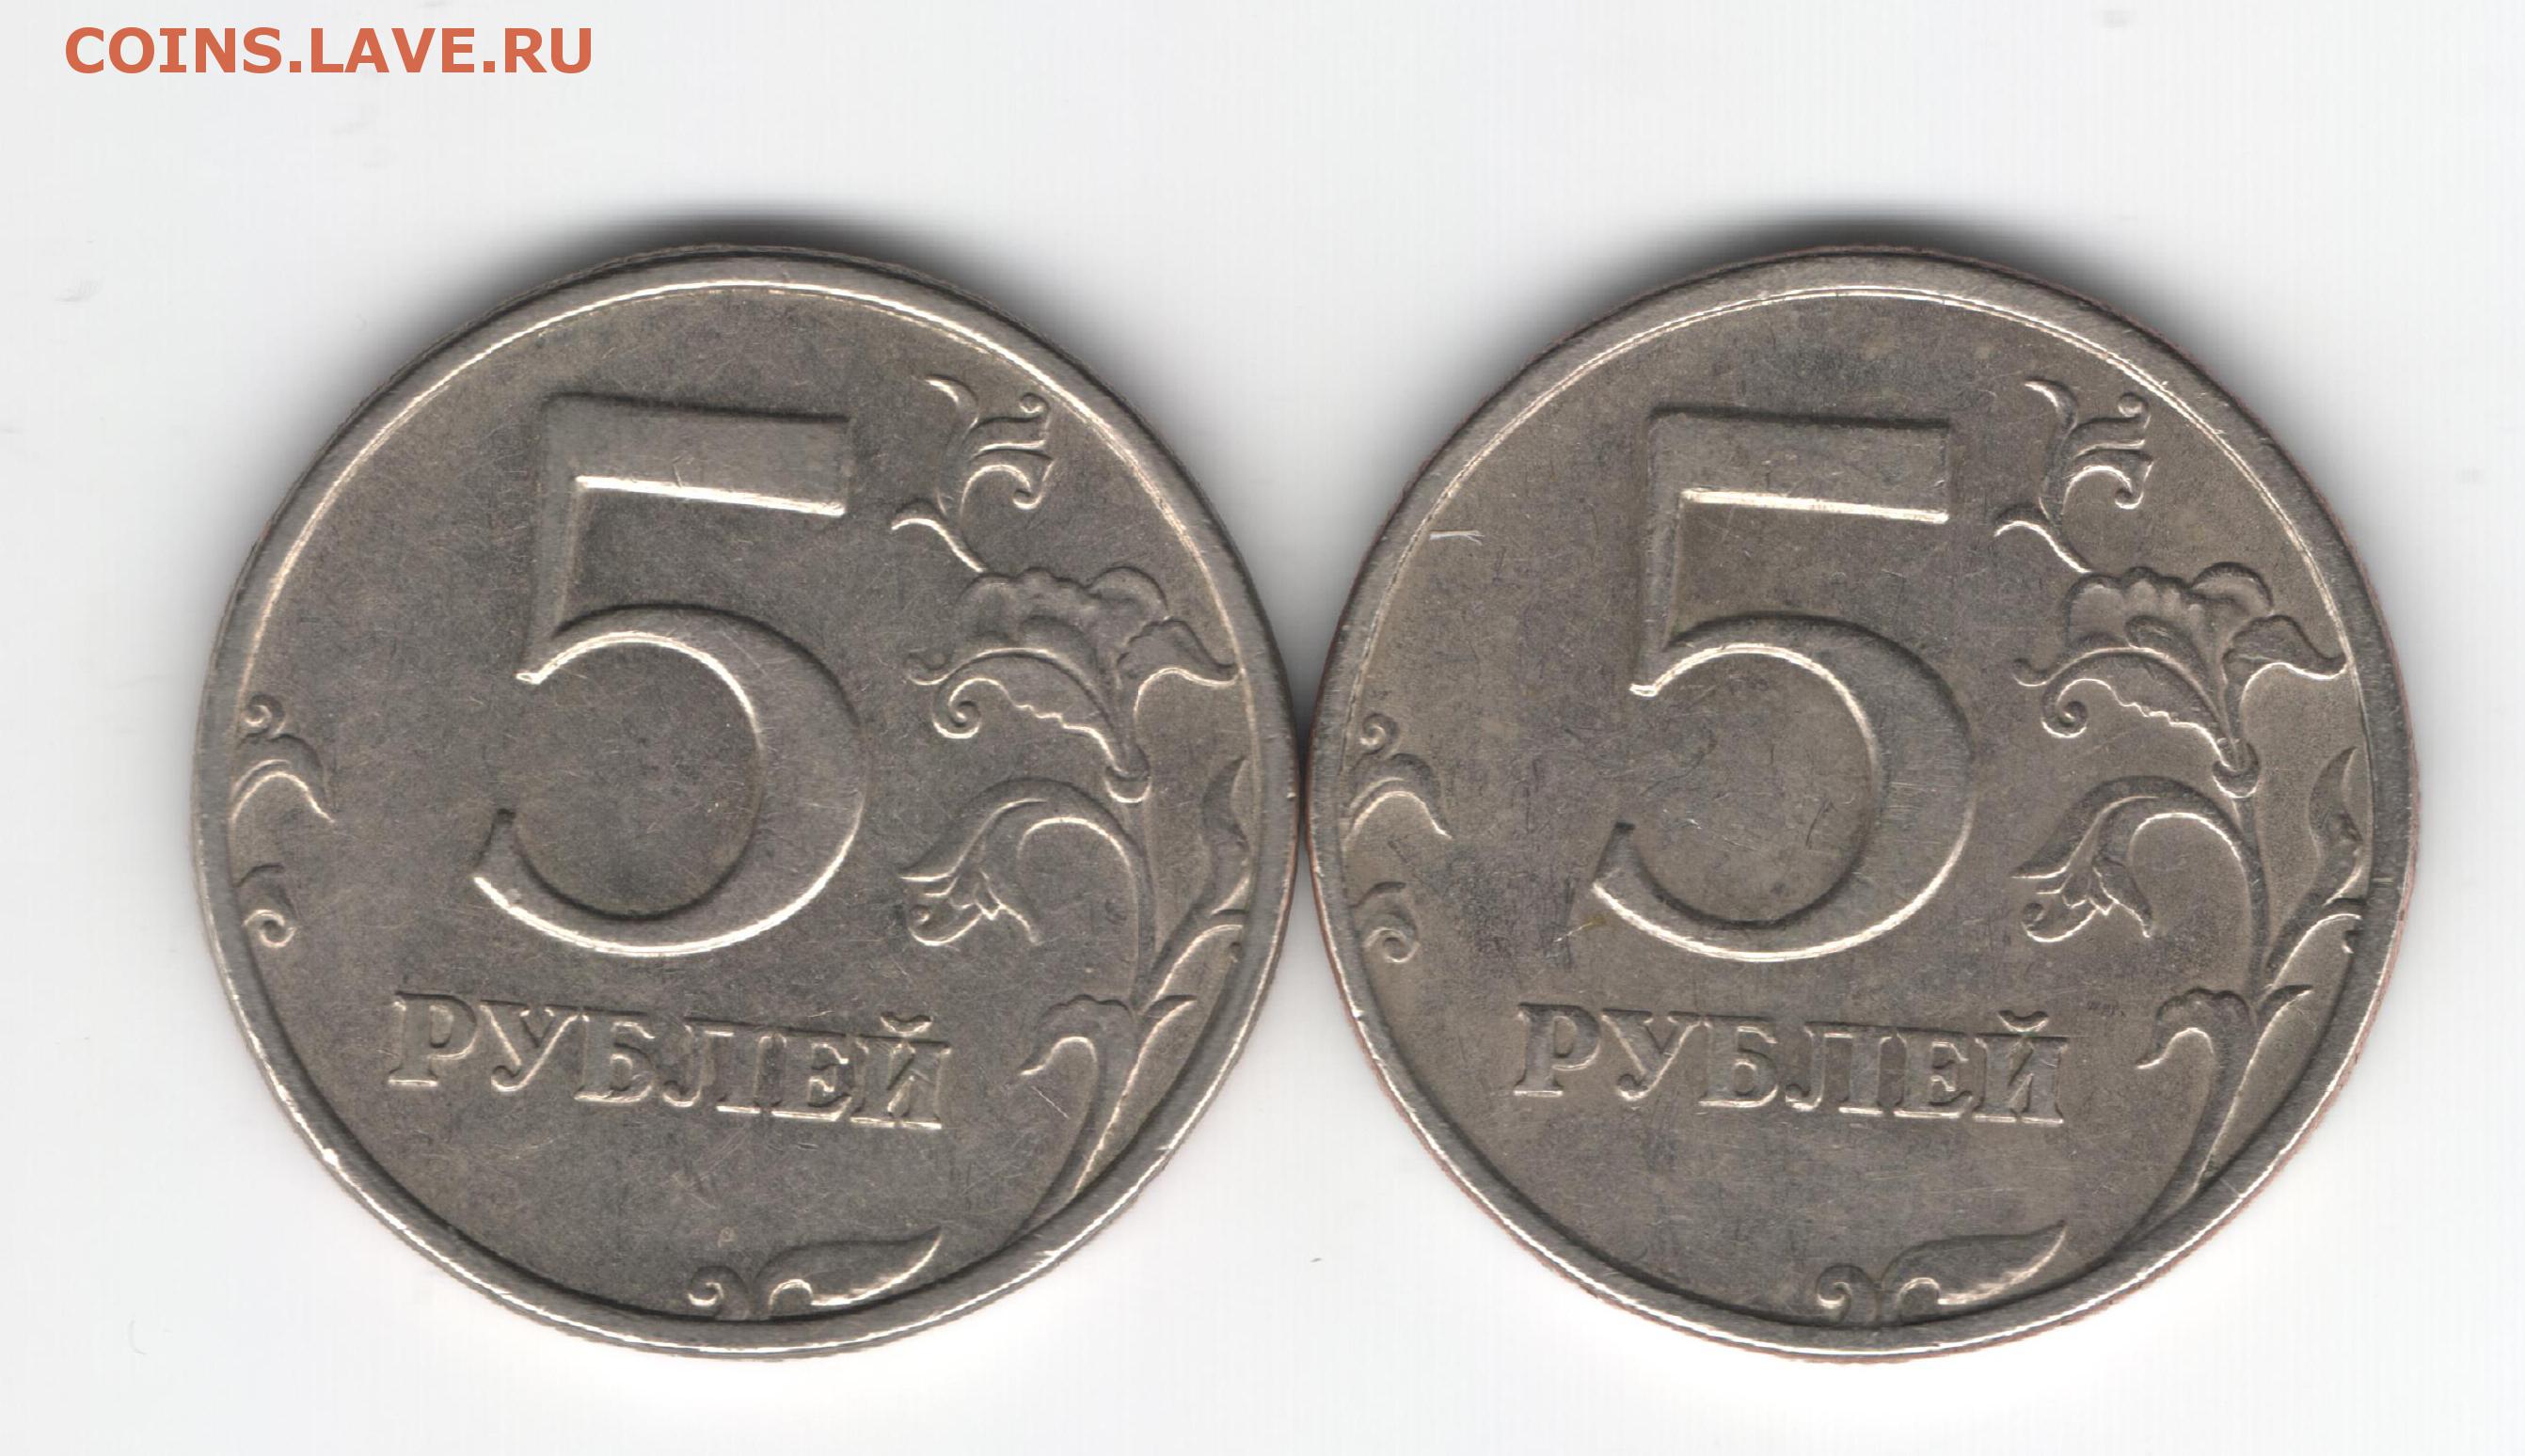 Рубль 5 29. Нумизматика 5 рублей 1997. 5 Рублей 1997 ММД. 5 Рублей 1997 г., раздвоенный контур цифры номинала.